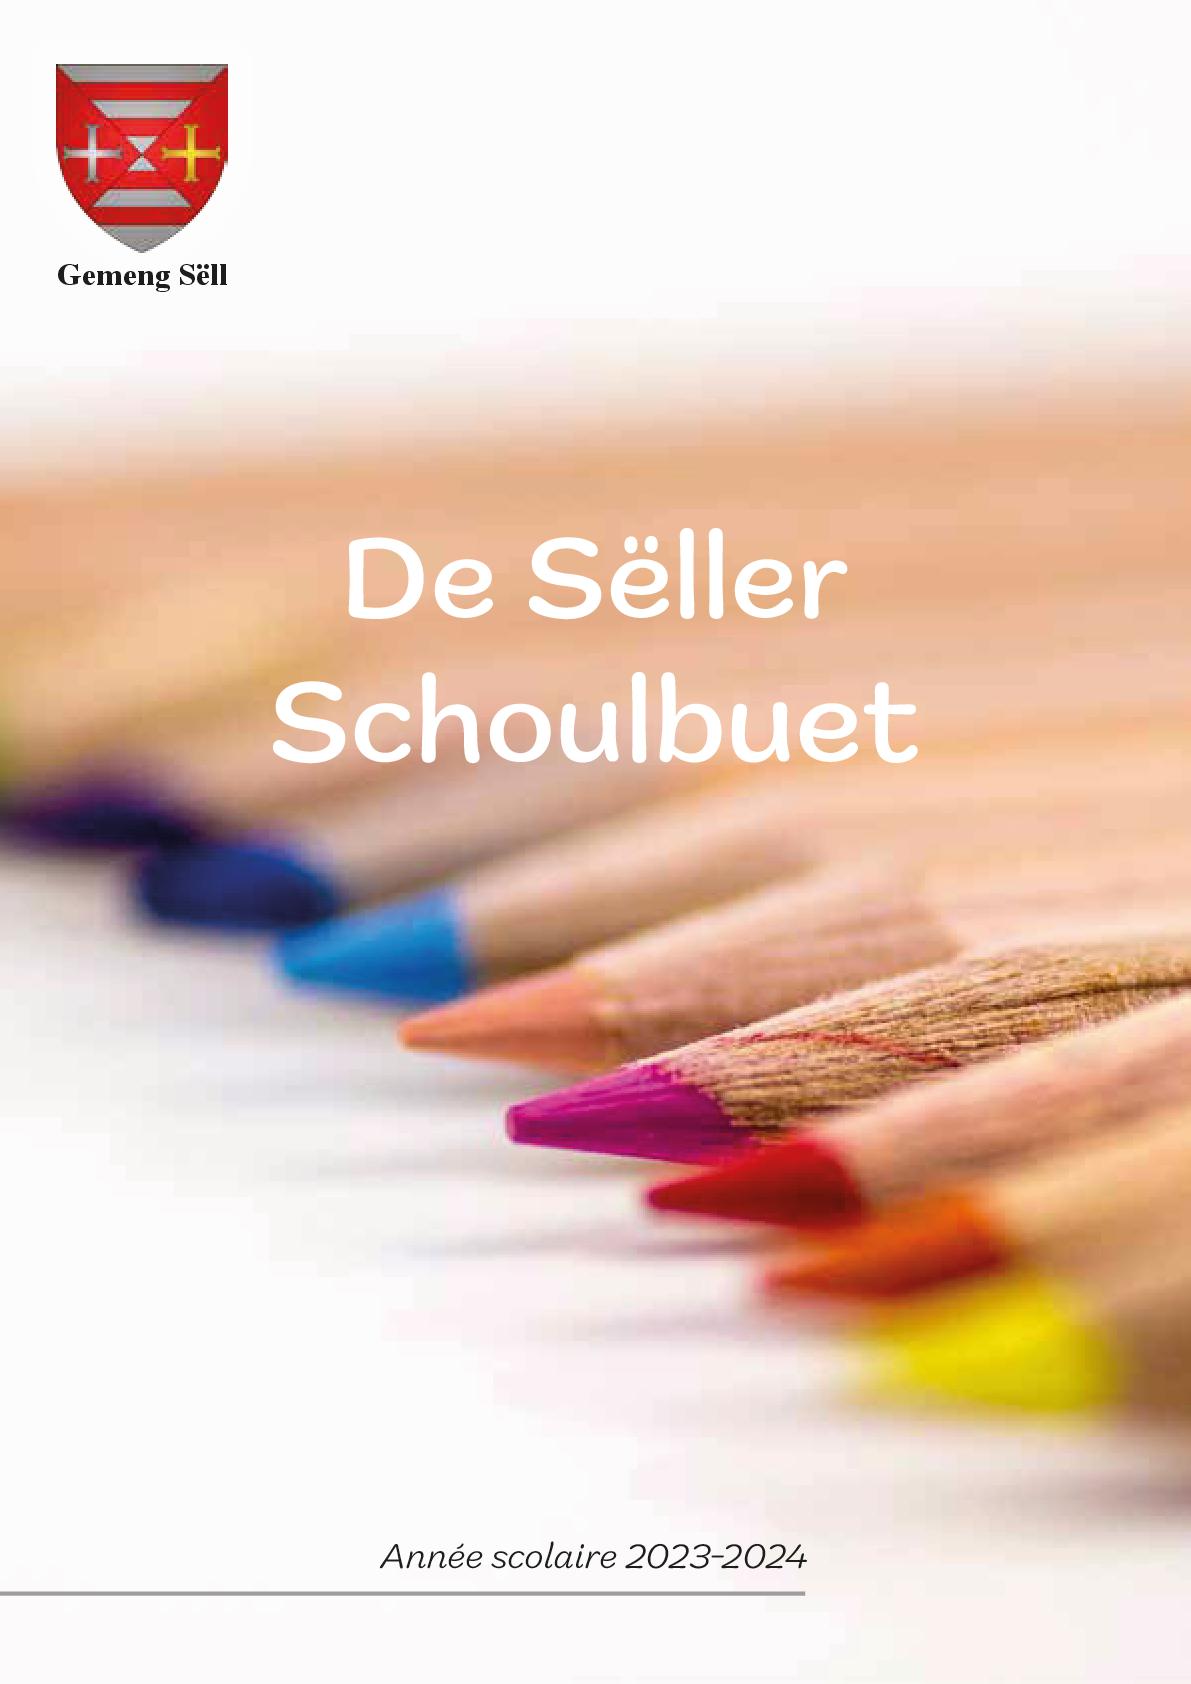 Schoulbuet / Bulletin scolaire 2023-2024